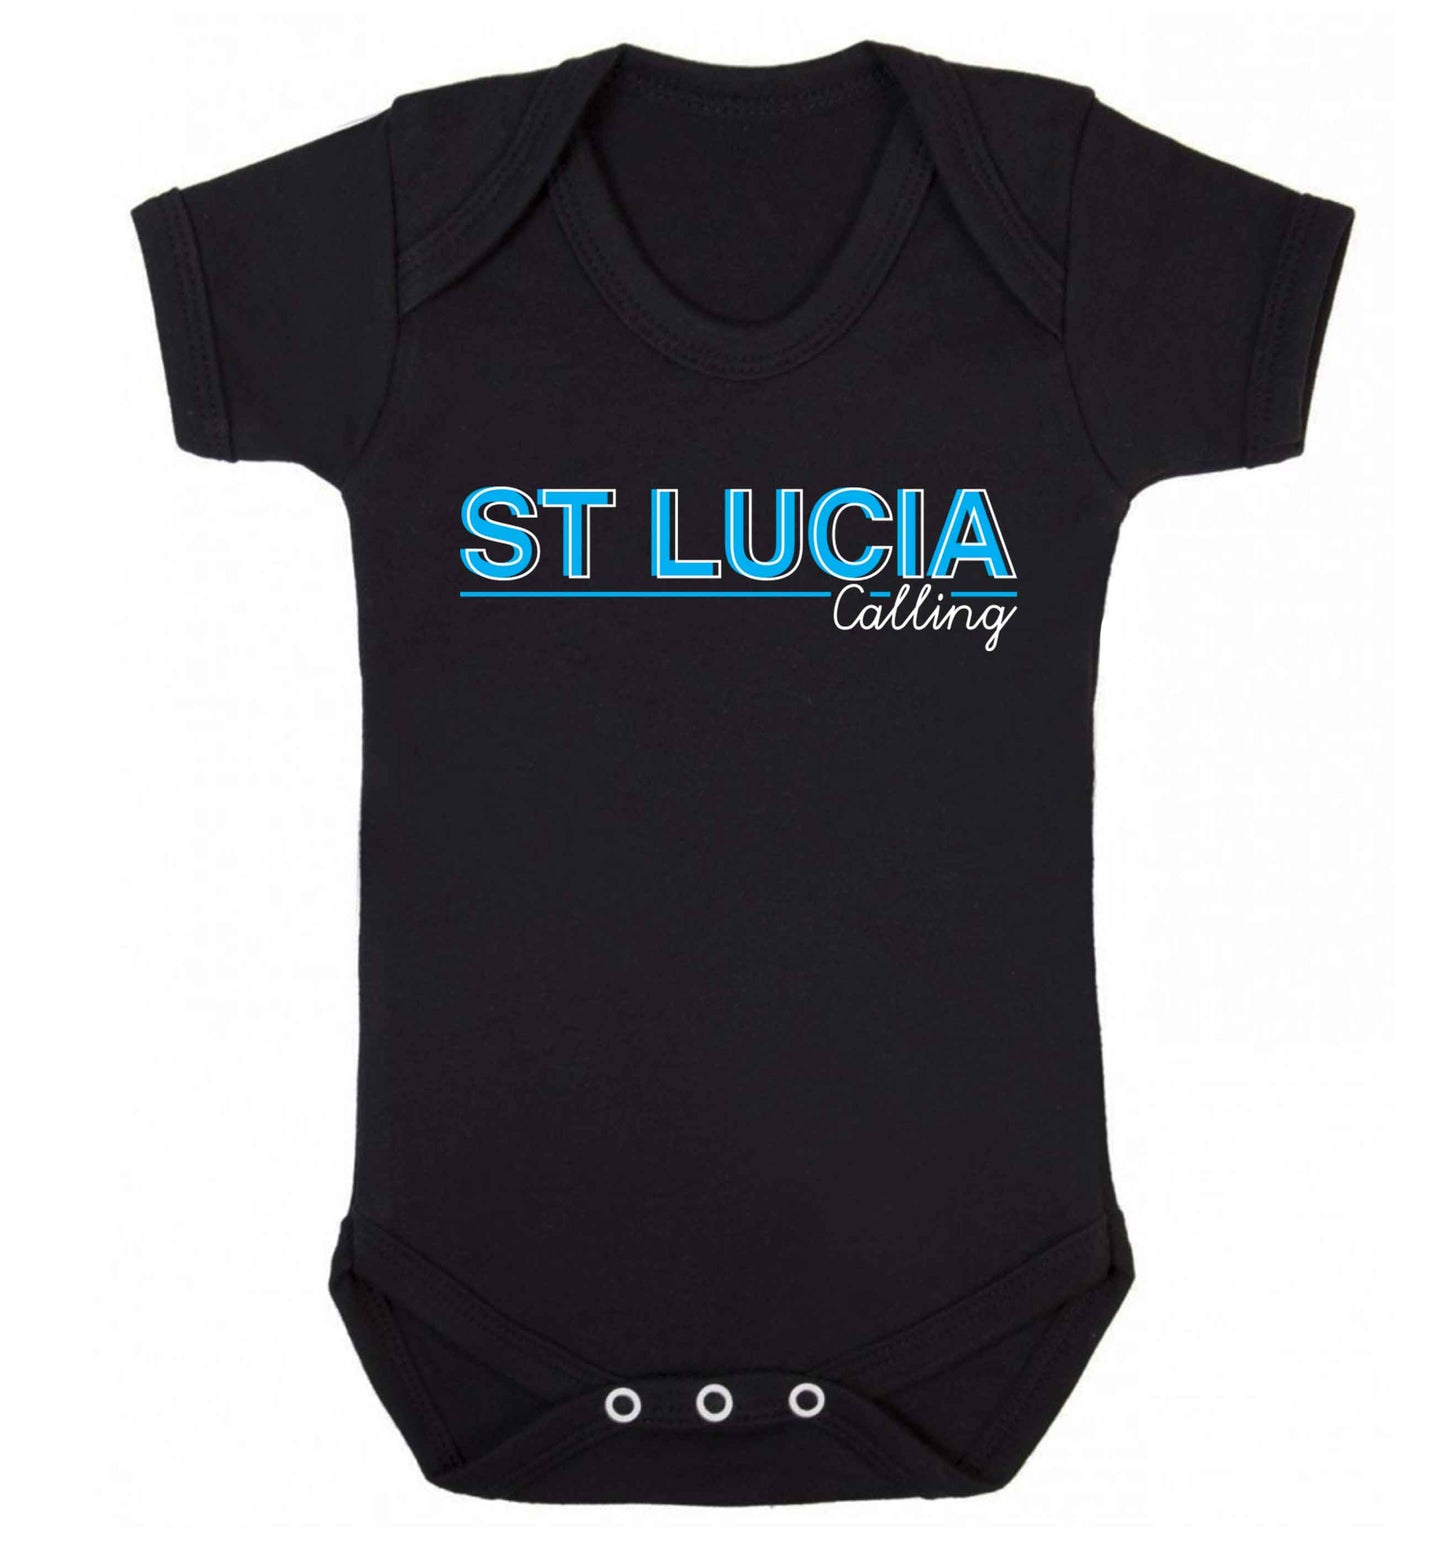 St Lucia calling Baby Vest black 18-24 months